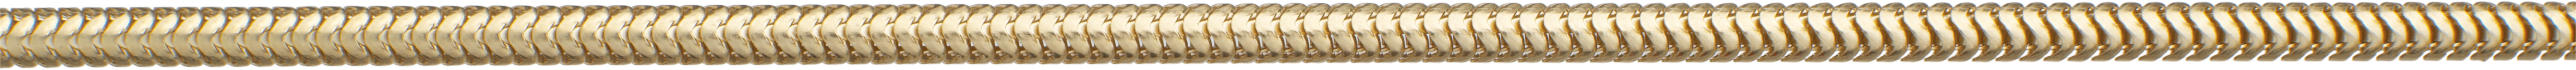 Snake chain gold 585/-Gg Ø 2,40mm